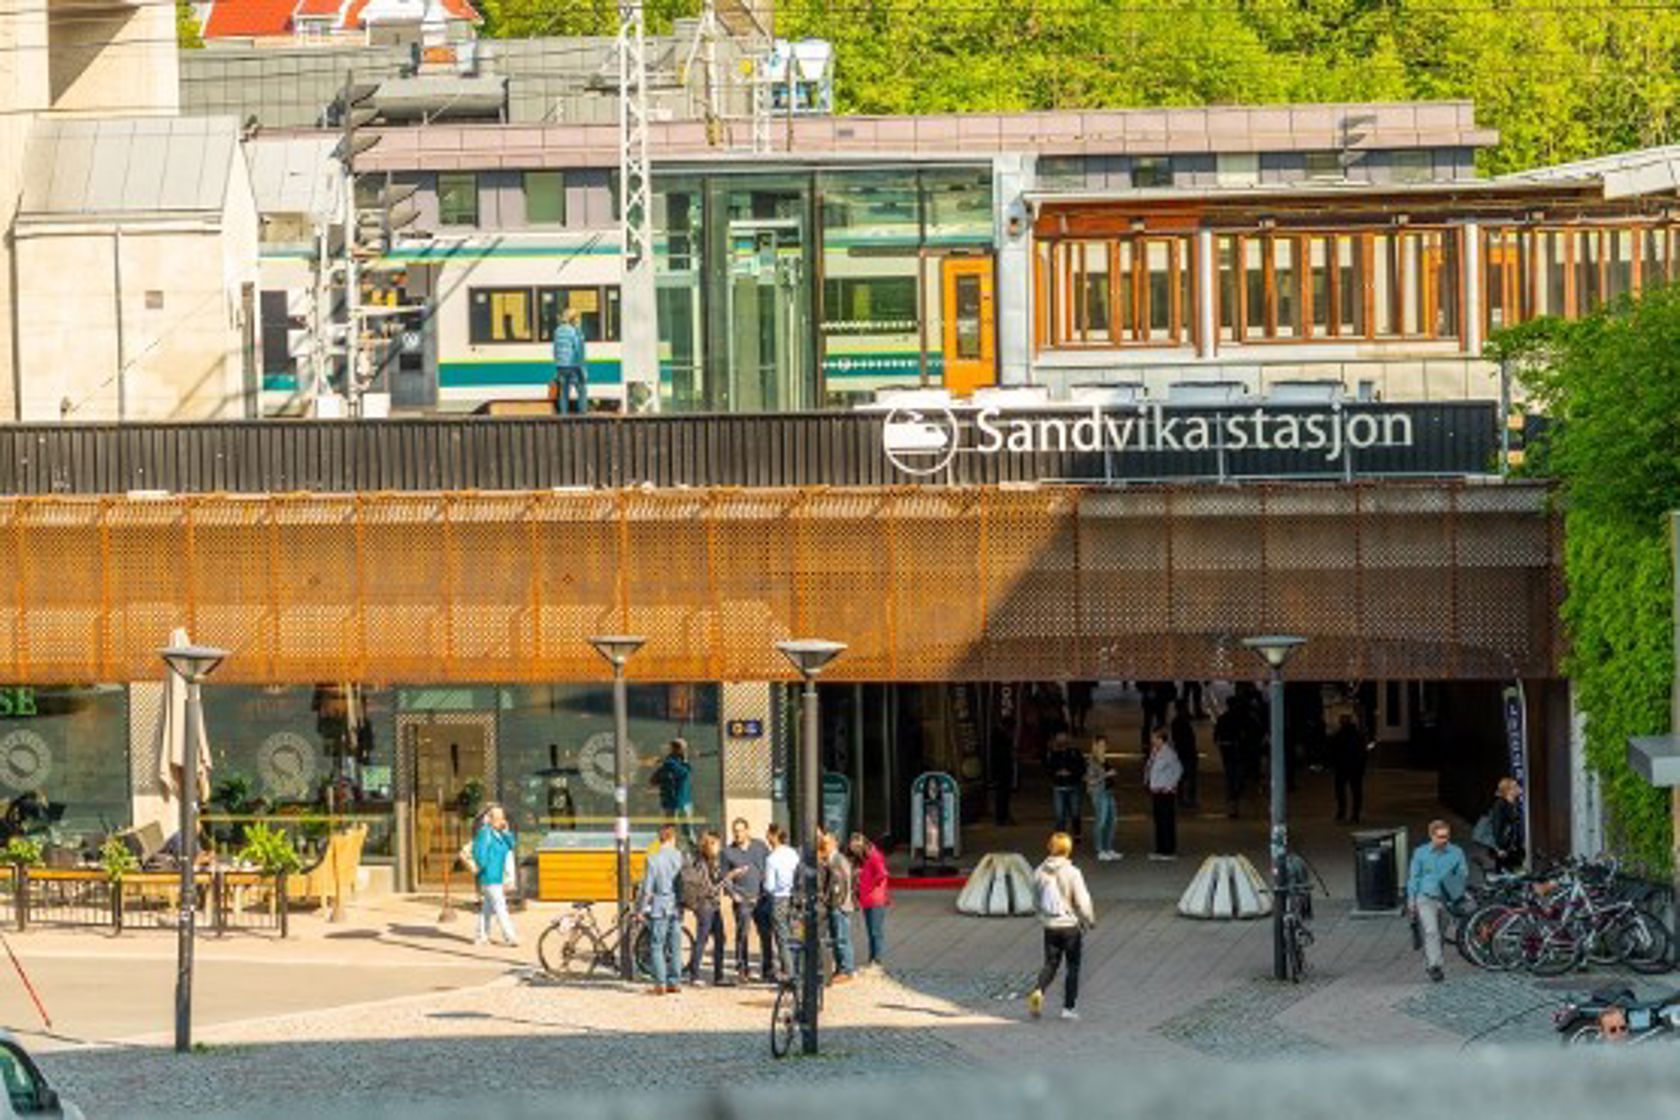 Exterior view of Sandvika station